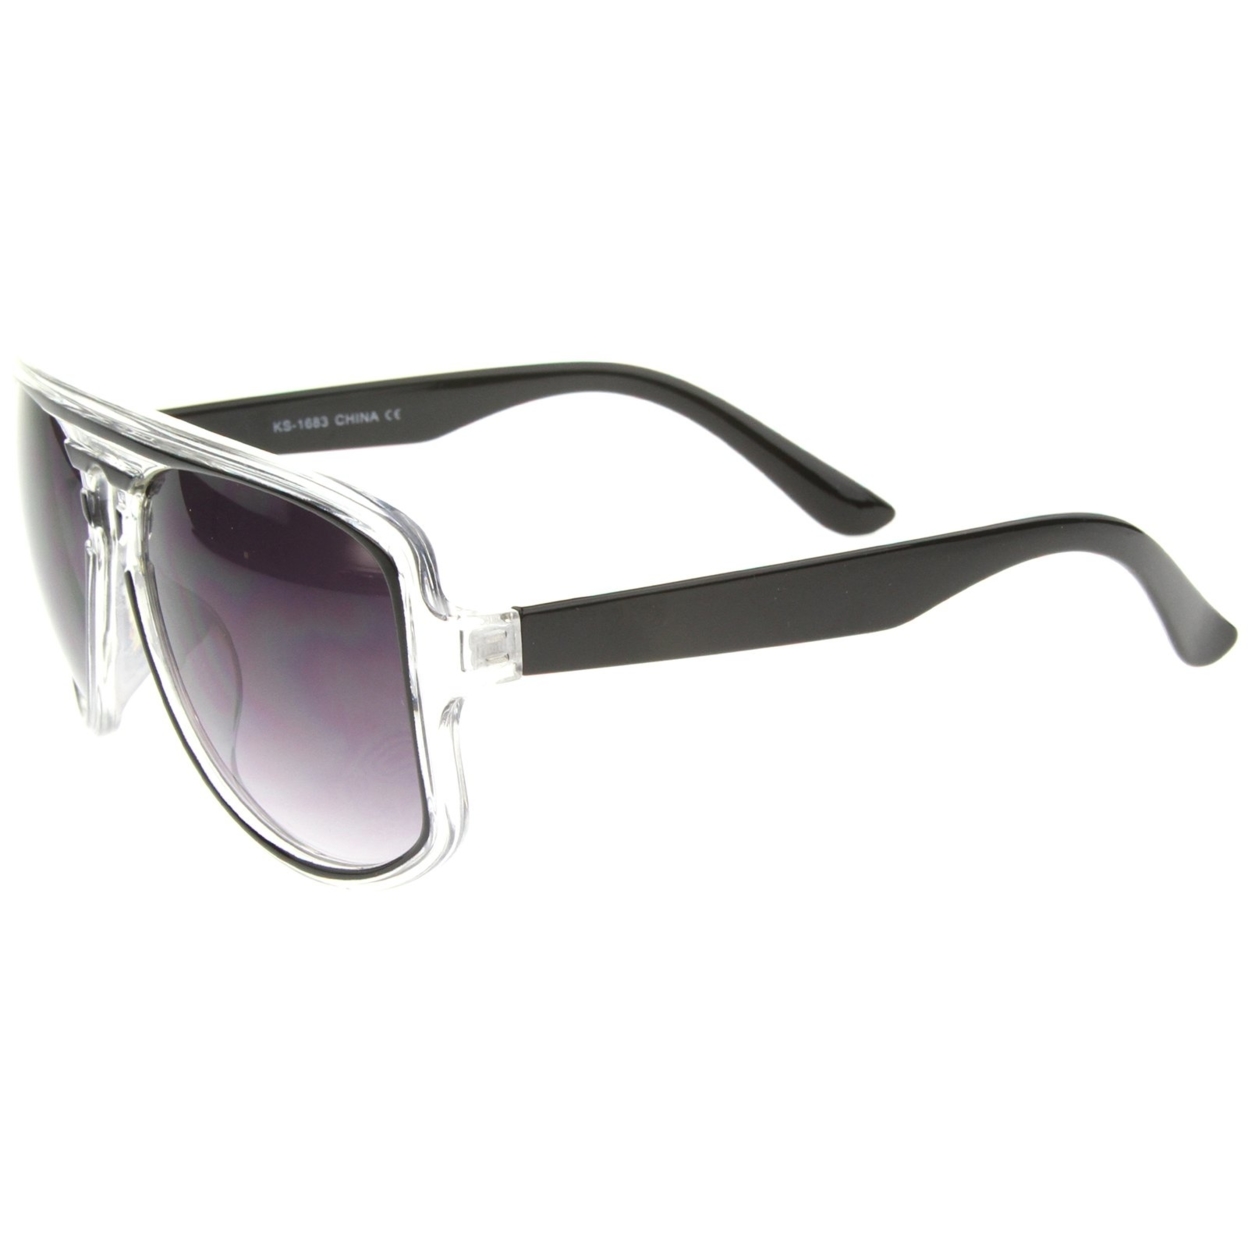 Modern Translucent Frame Keyhole Flat Top Square Aviator Sunglasses 46mm - Black / Lavender